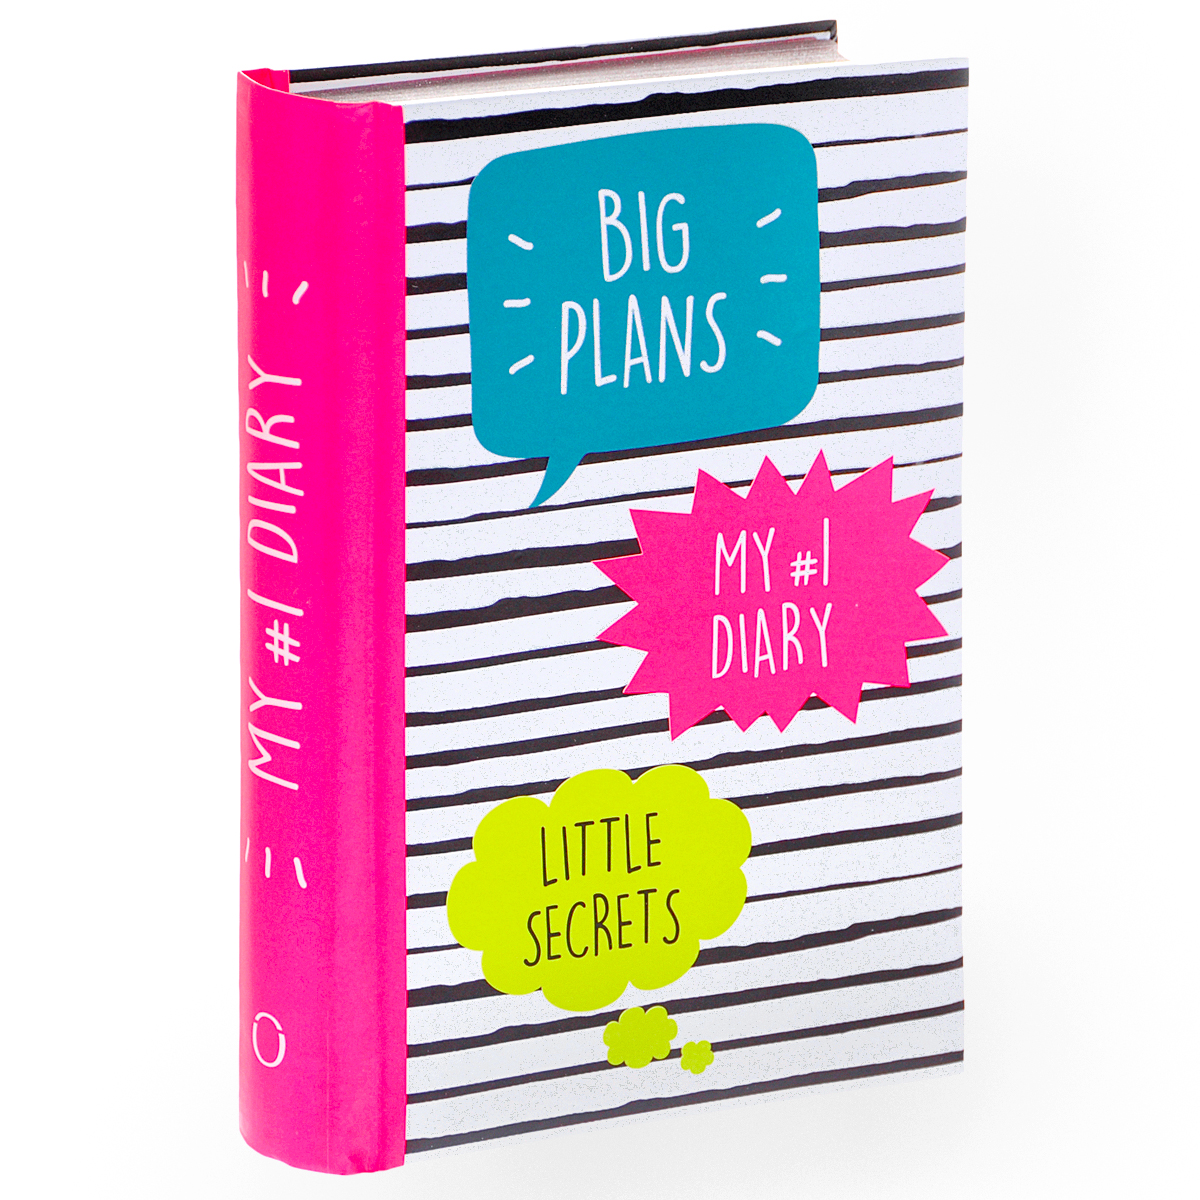 My №1 Diary: Big Plans: Little Secrets